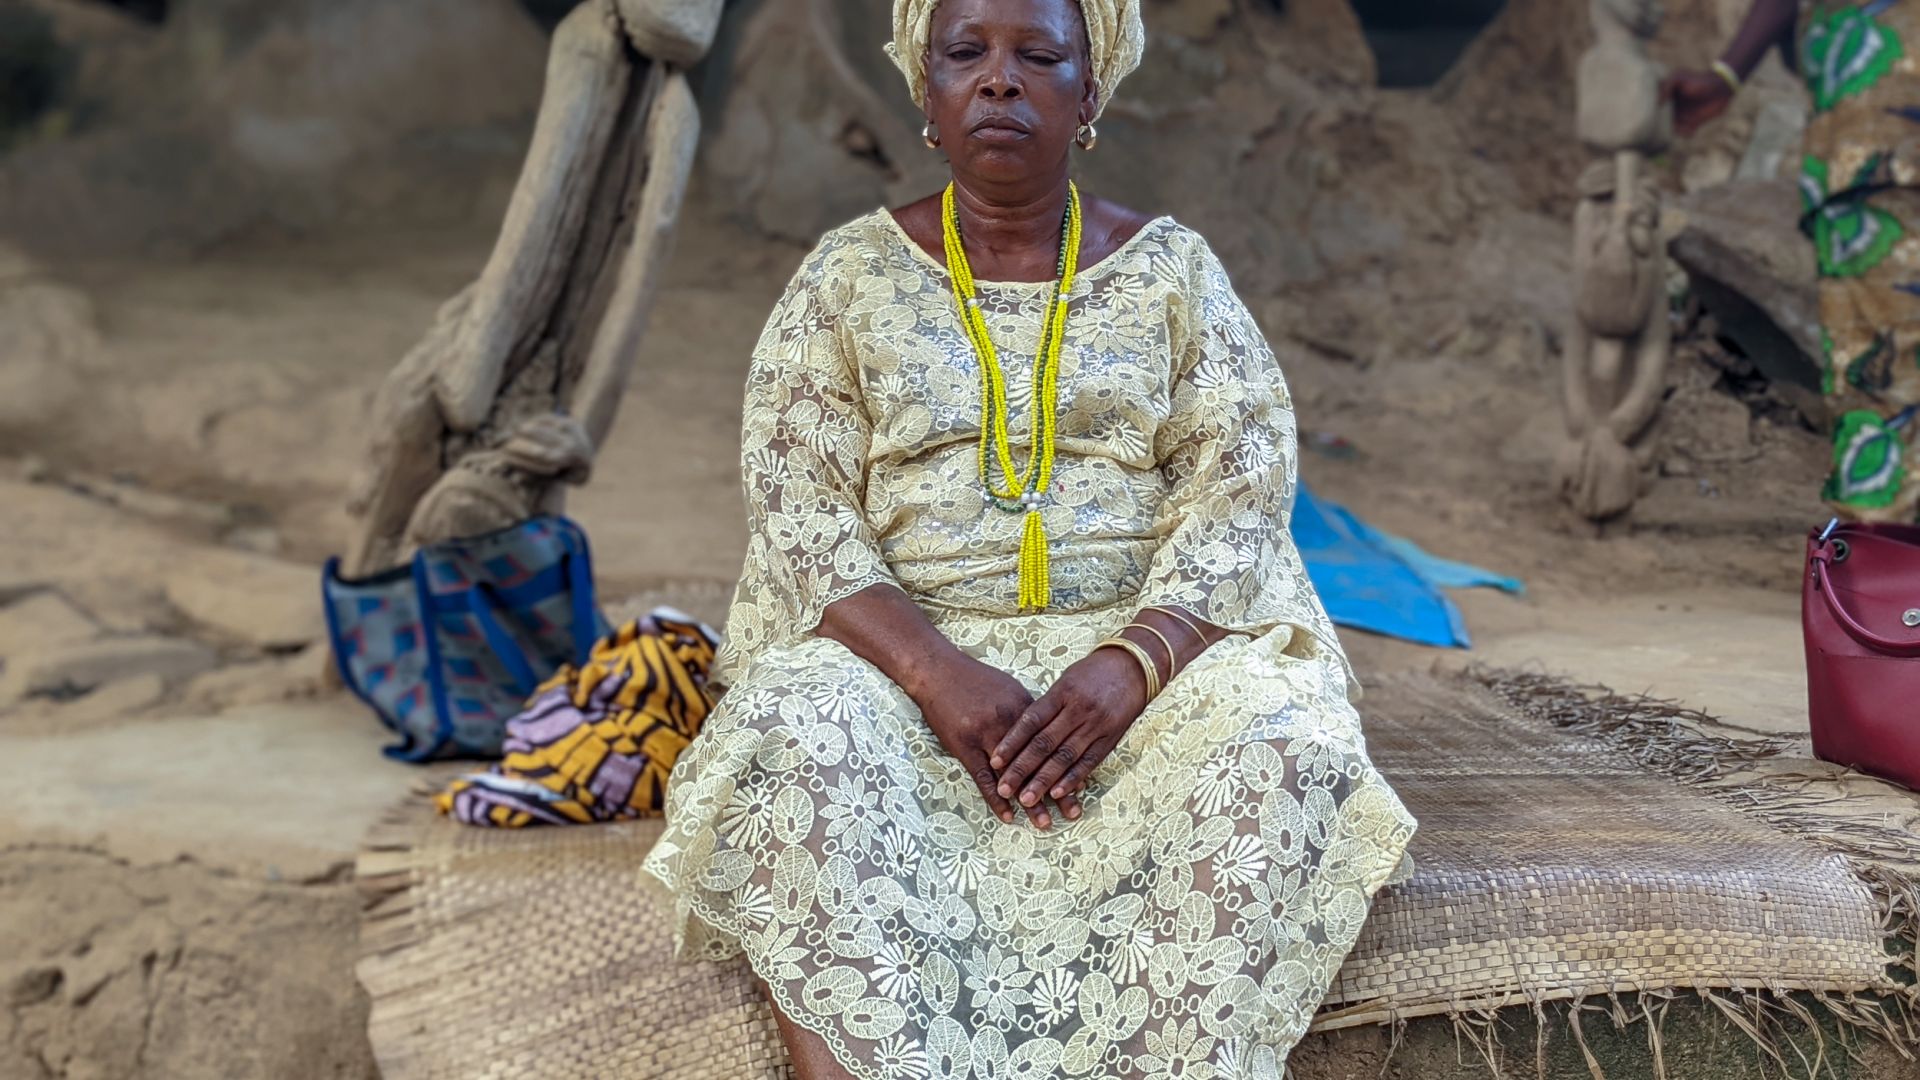 Osunyemi Efunsola, who has been chief priestess of Busanyin, a companion deity for Osun, for the last 25 years [Eromo Egbejule/Al Jazeera]